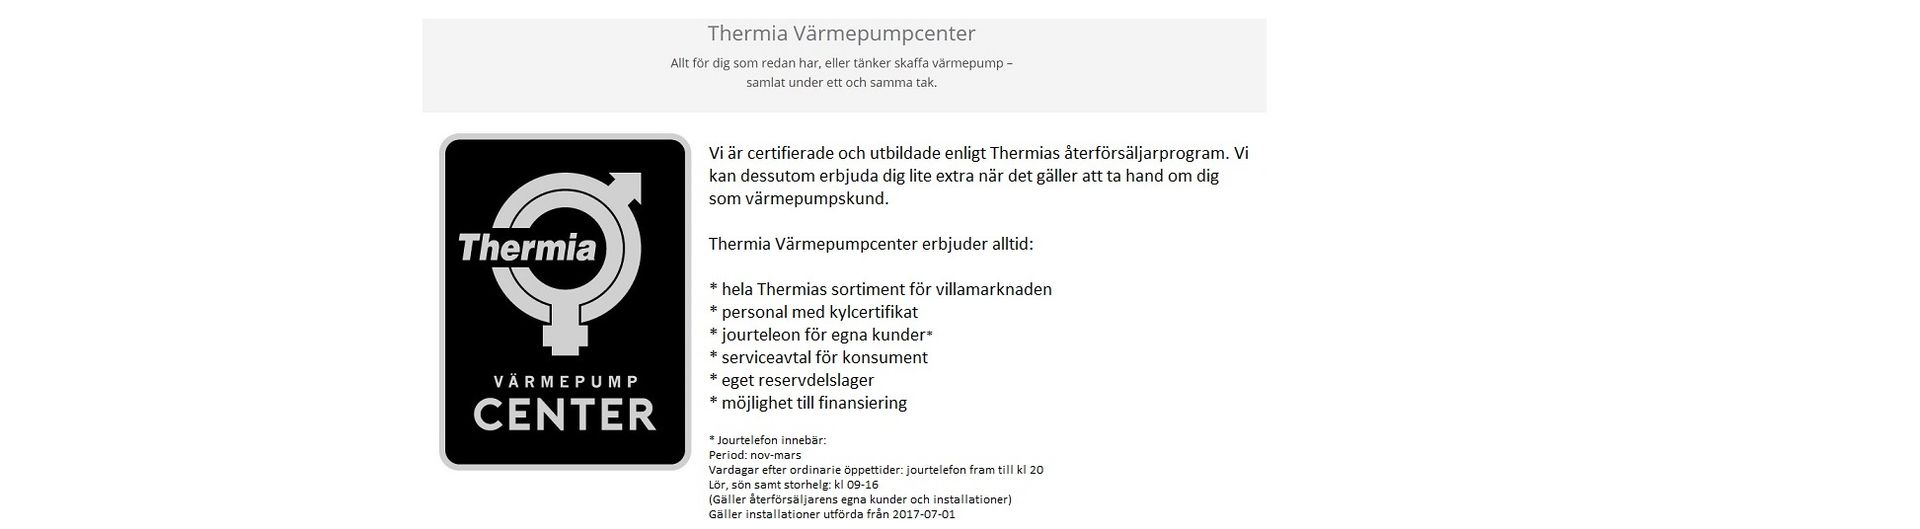 thermia-varmepumpcenter-71